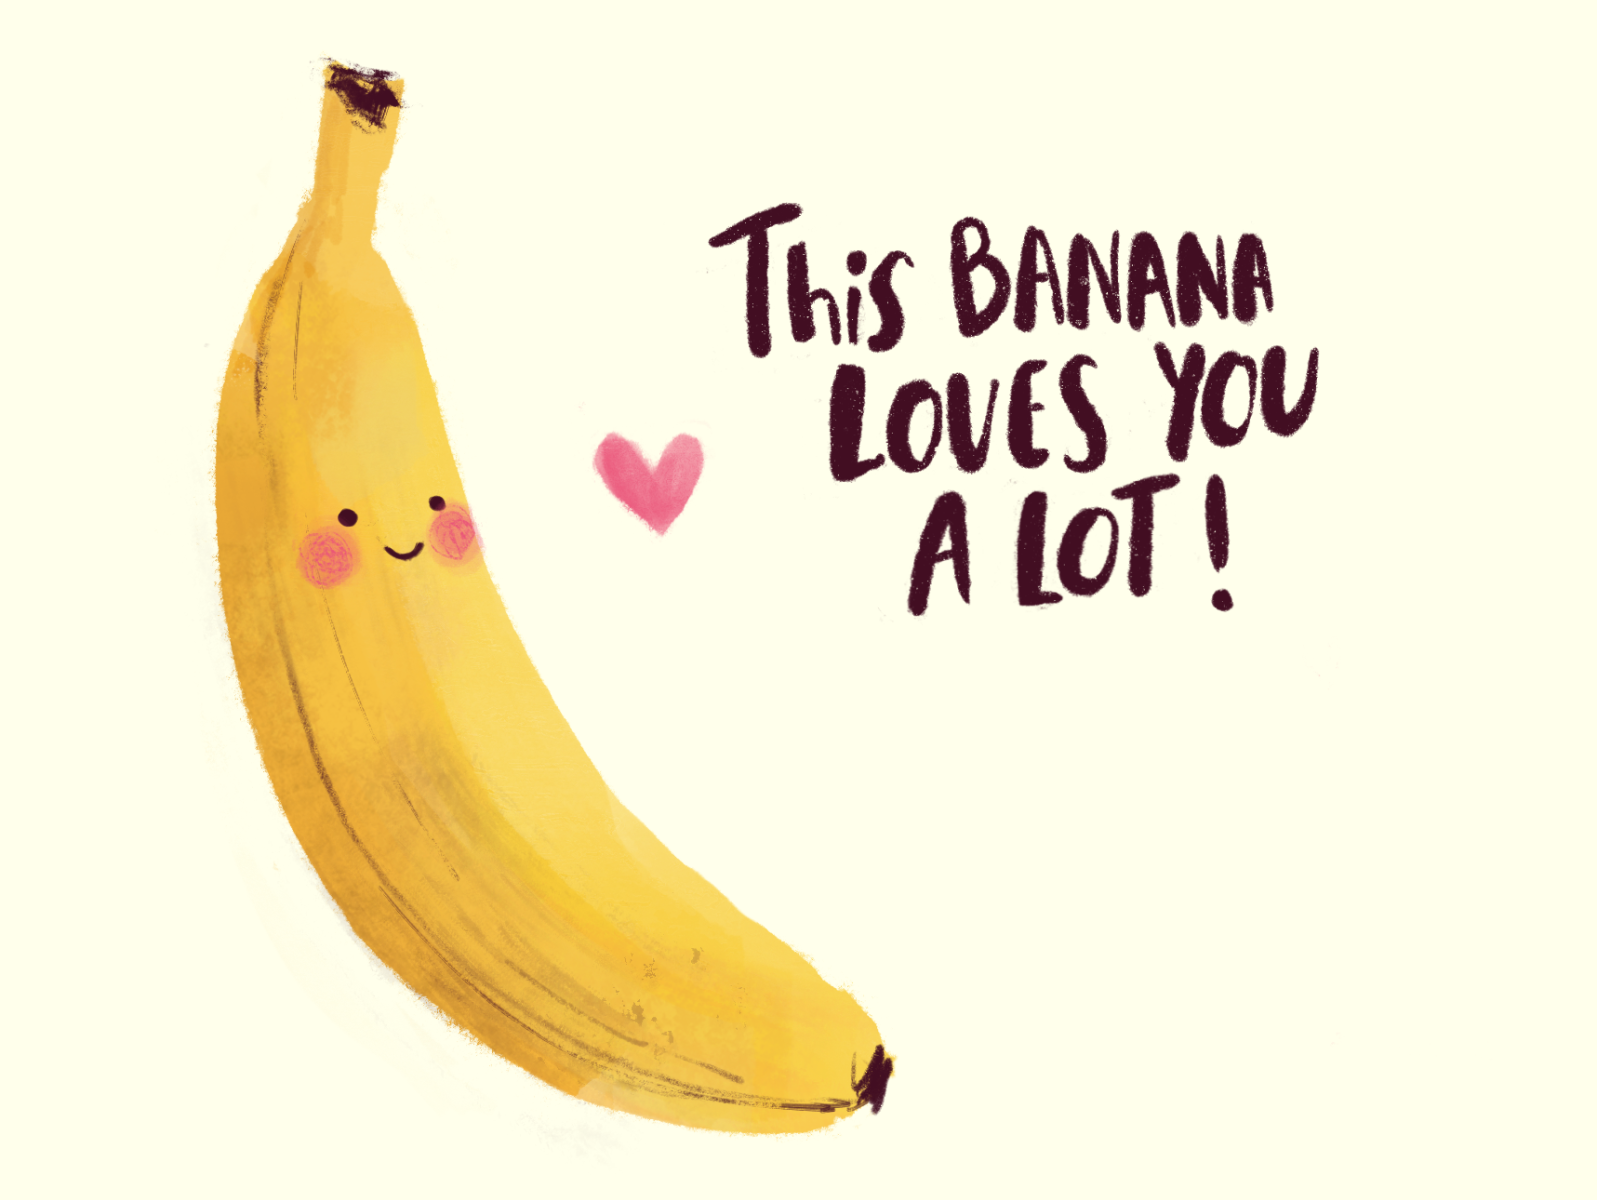 They like bananas. Банан любовь. Люблю бананы. Любимый банан. Банан для любимого.